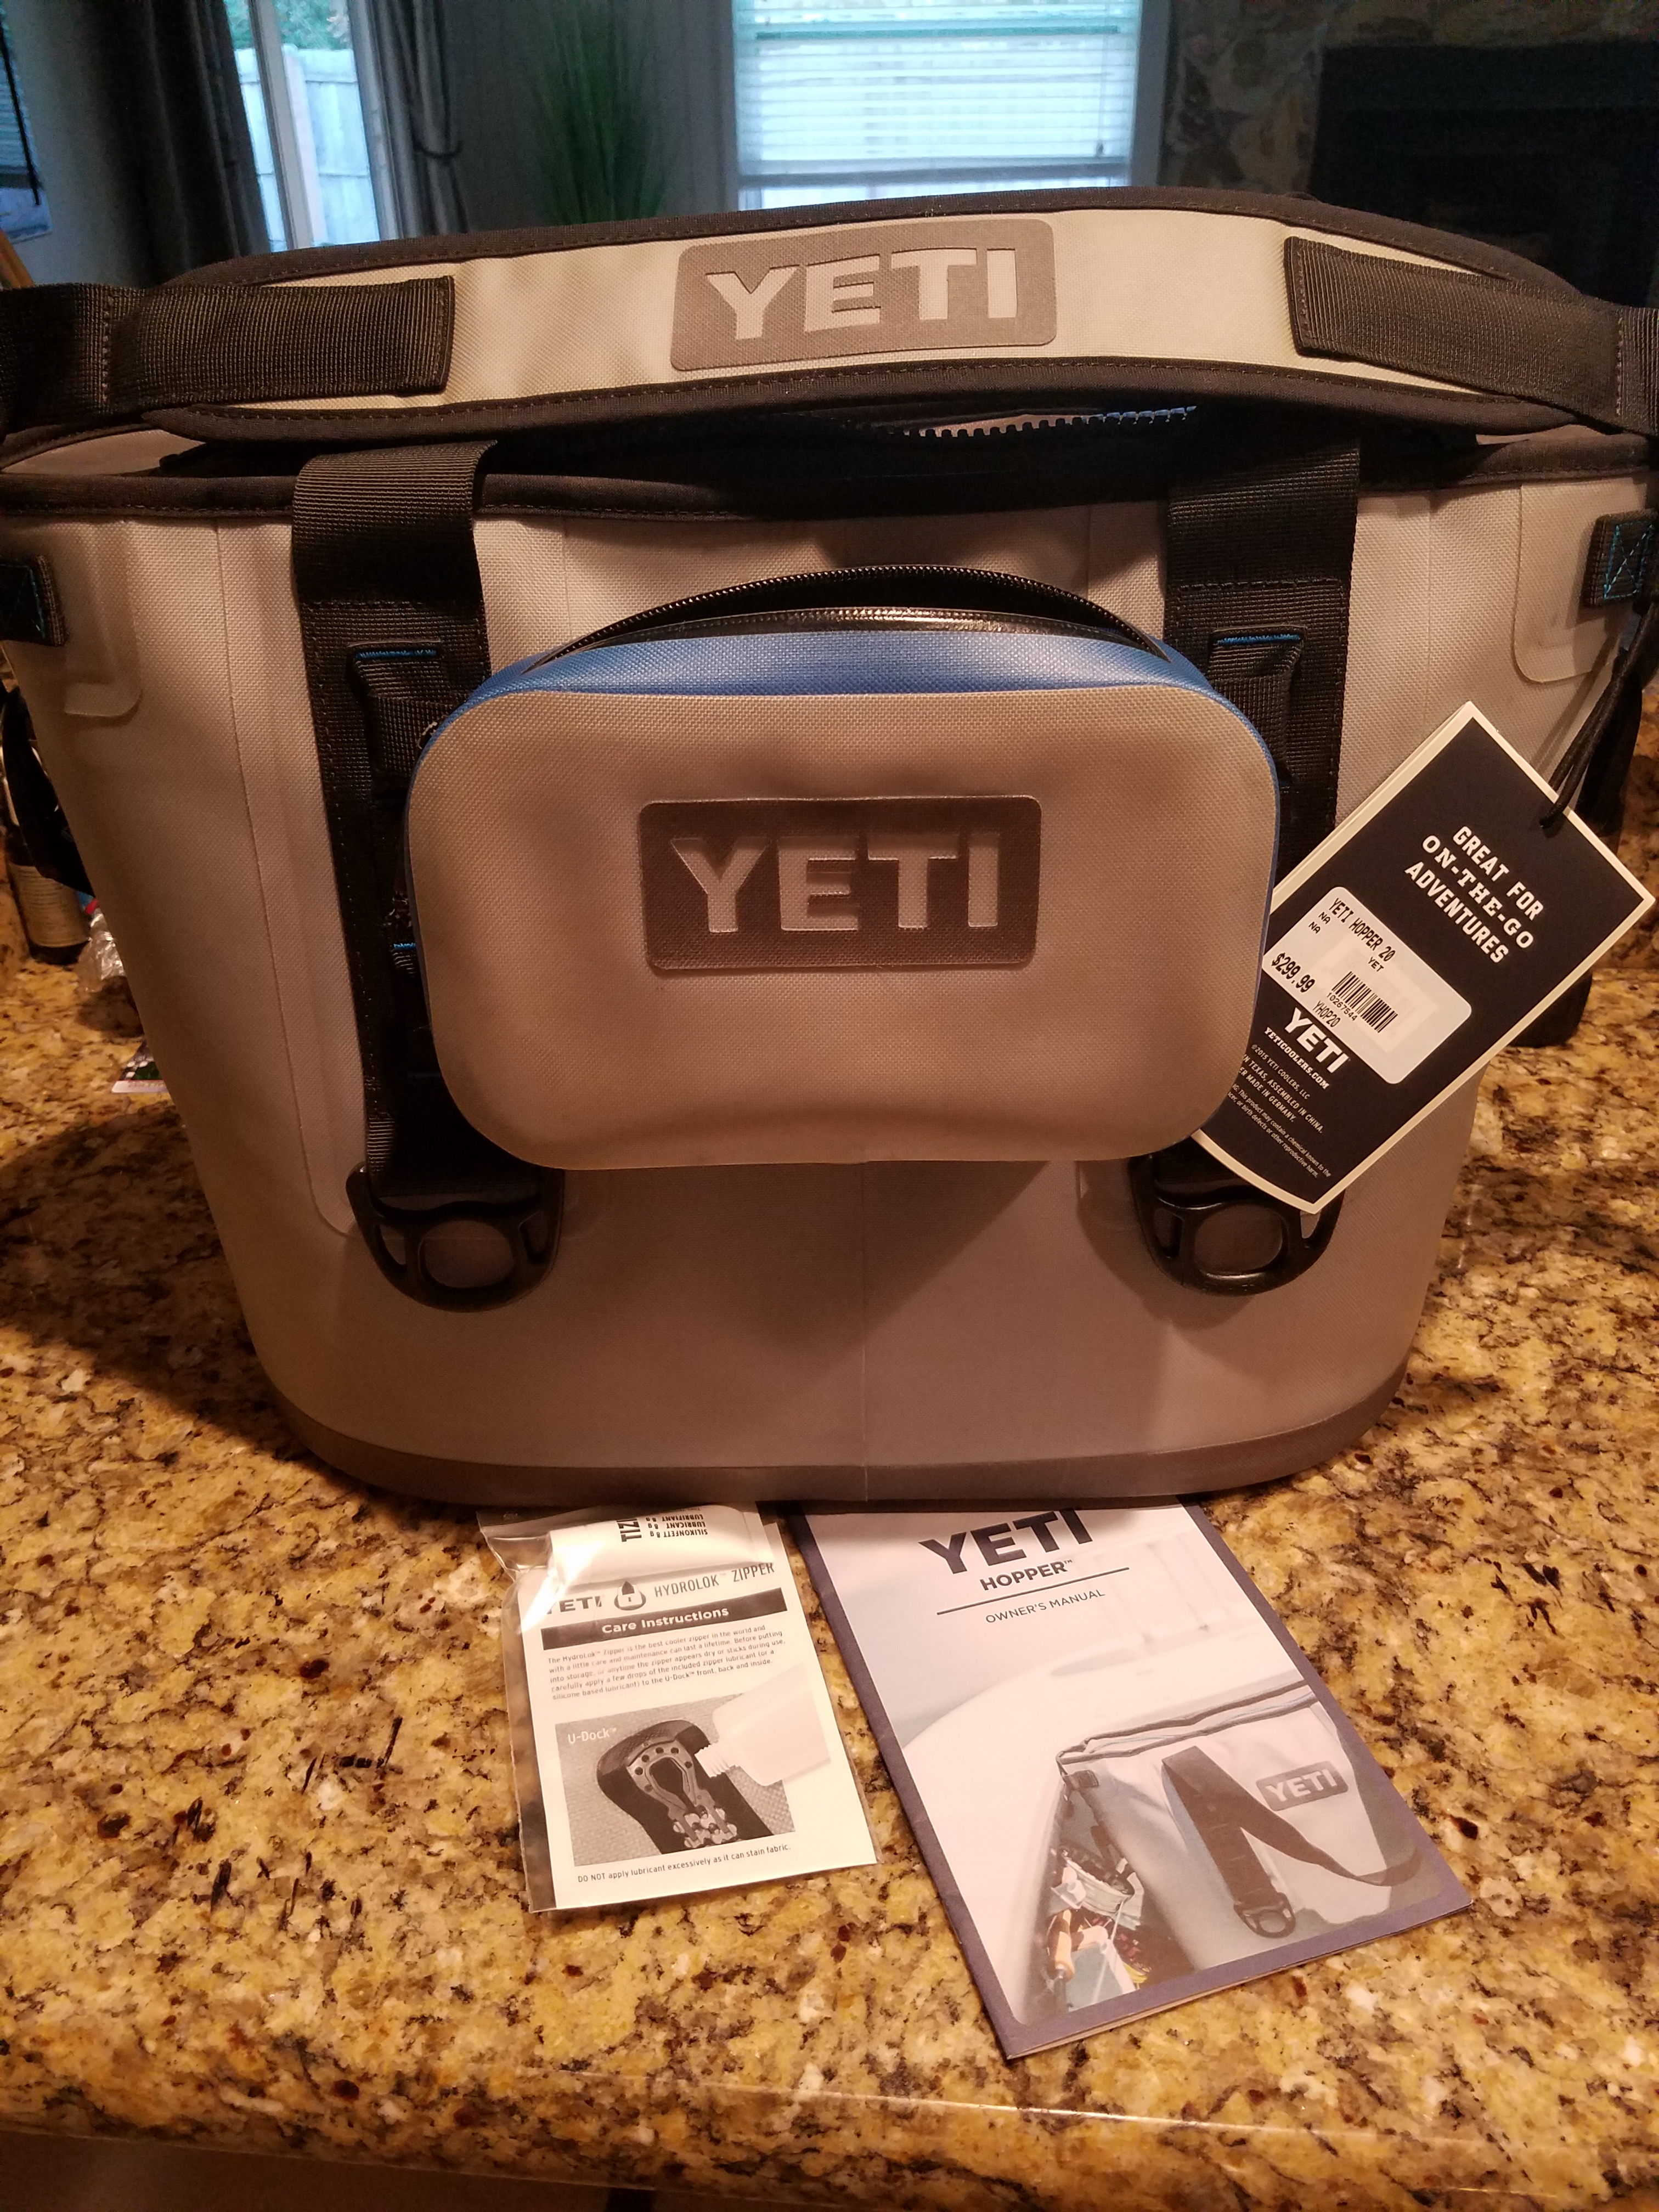 Yeti Hopper 20 with Side kick - Boat Accessories & Props - MBGforum.com